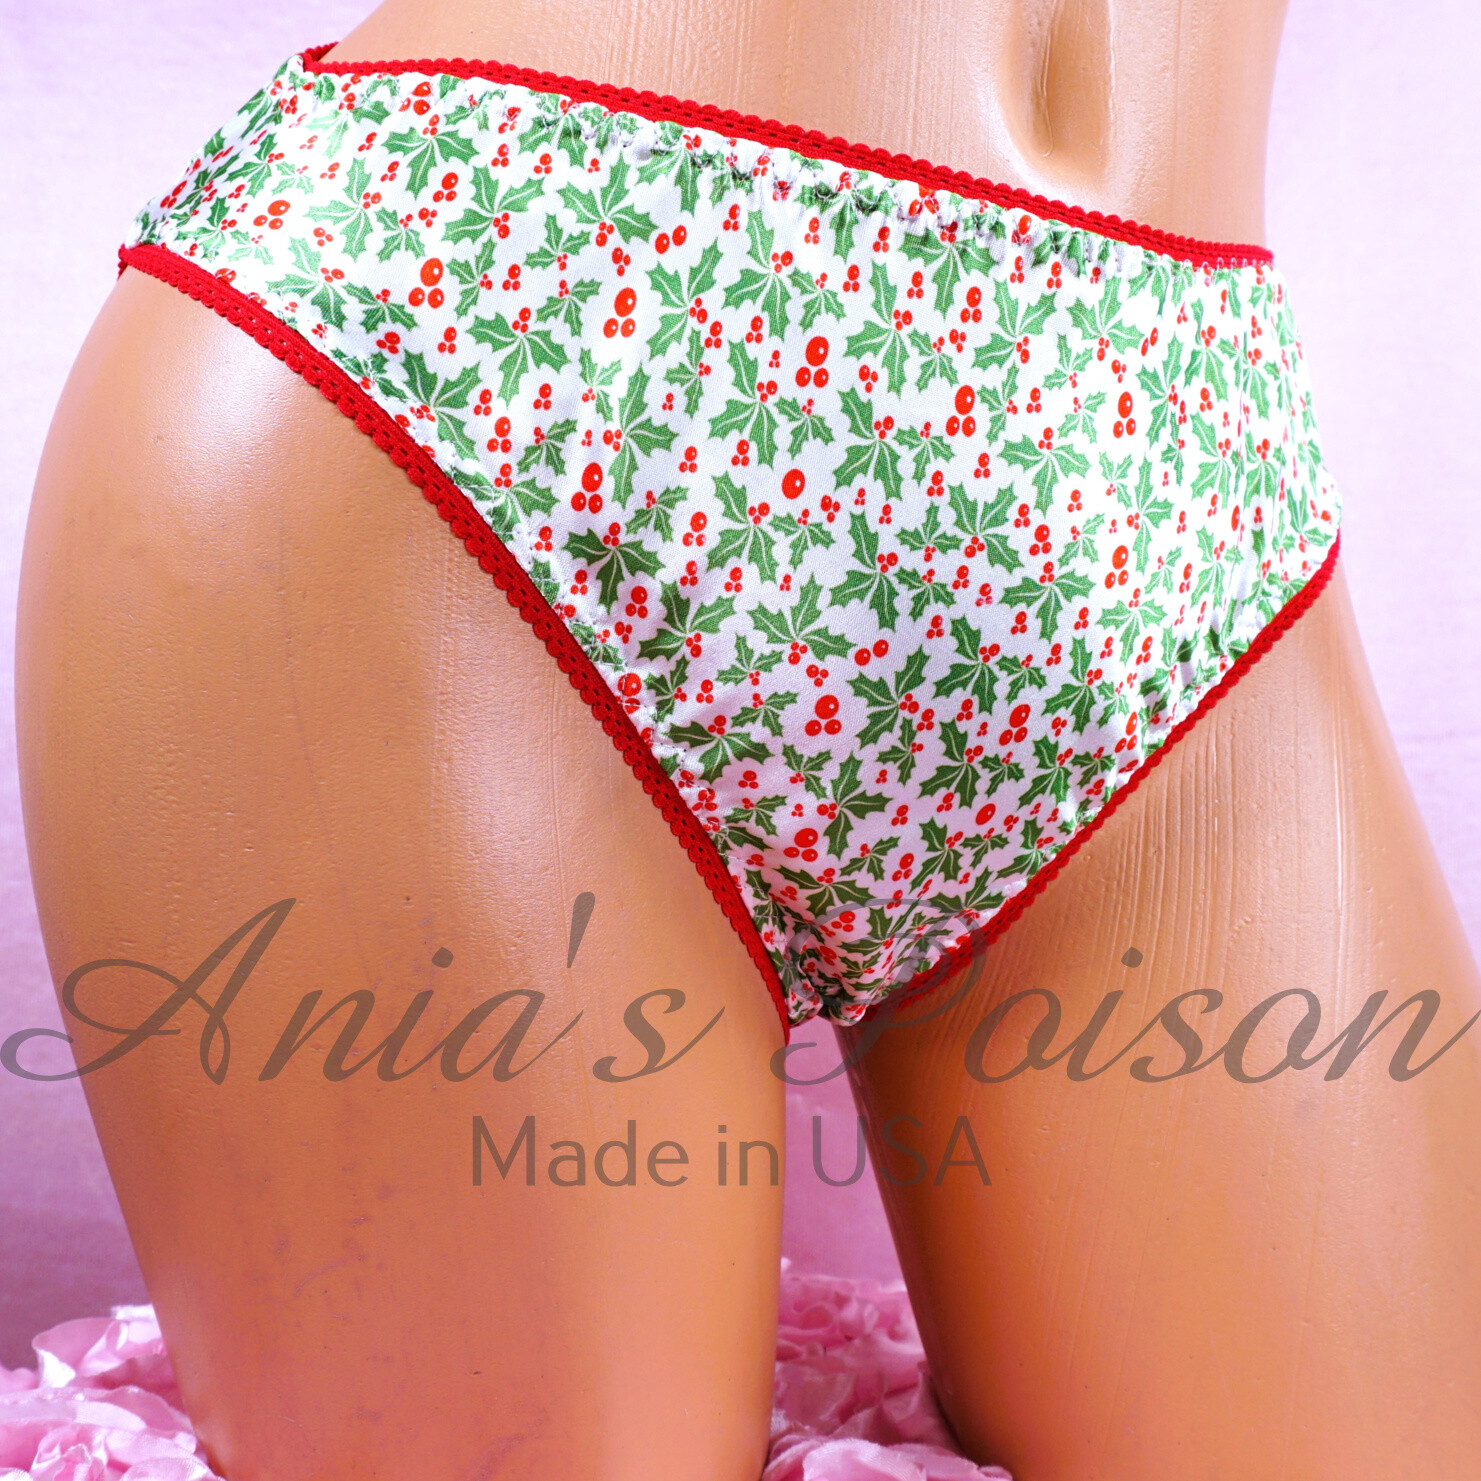 Lace Duchess Classic 80's cut Holly Christmas print New Full CUT All satin wet look ladies panties sz L or XL